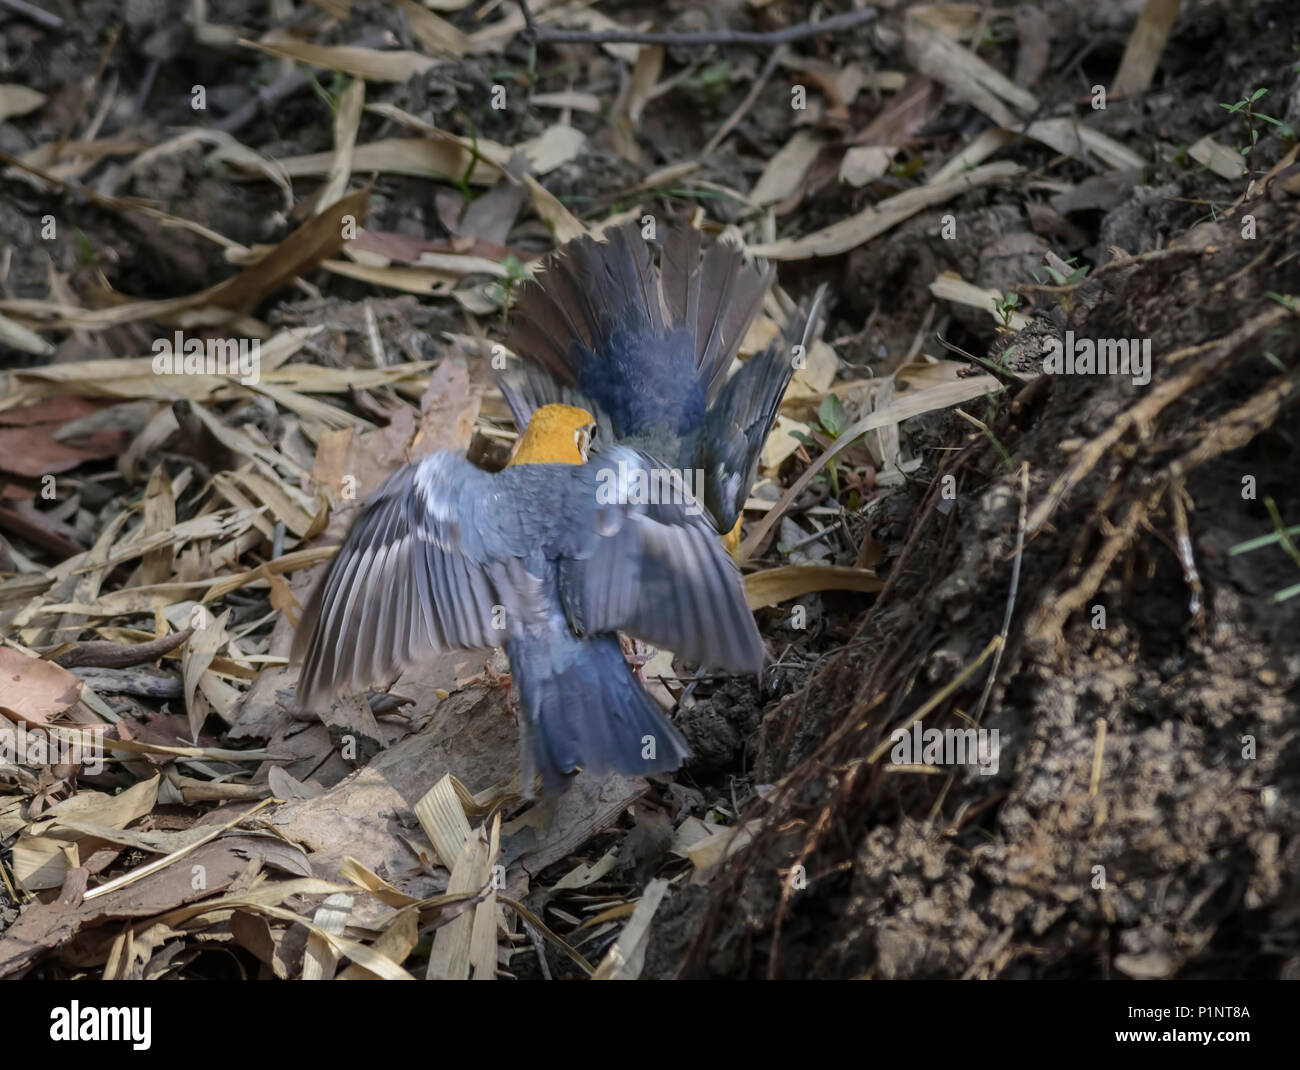 Small colorful bird, Orange-headed Thrush, Geokichla citrina fighting, with copy space Stock Photo